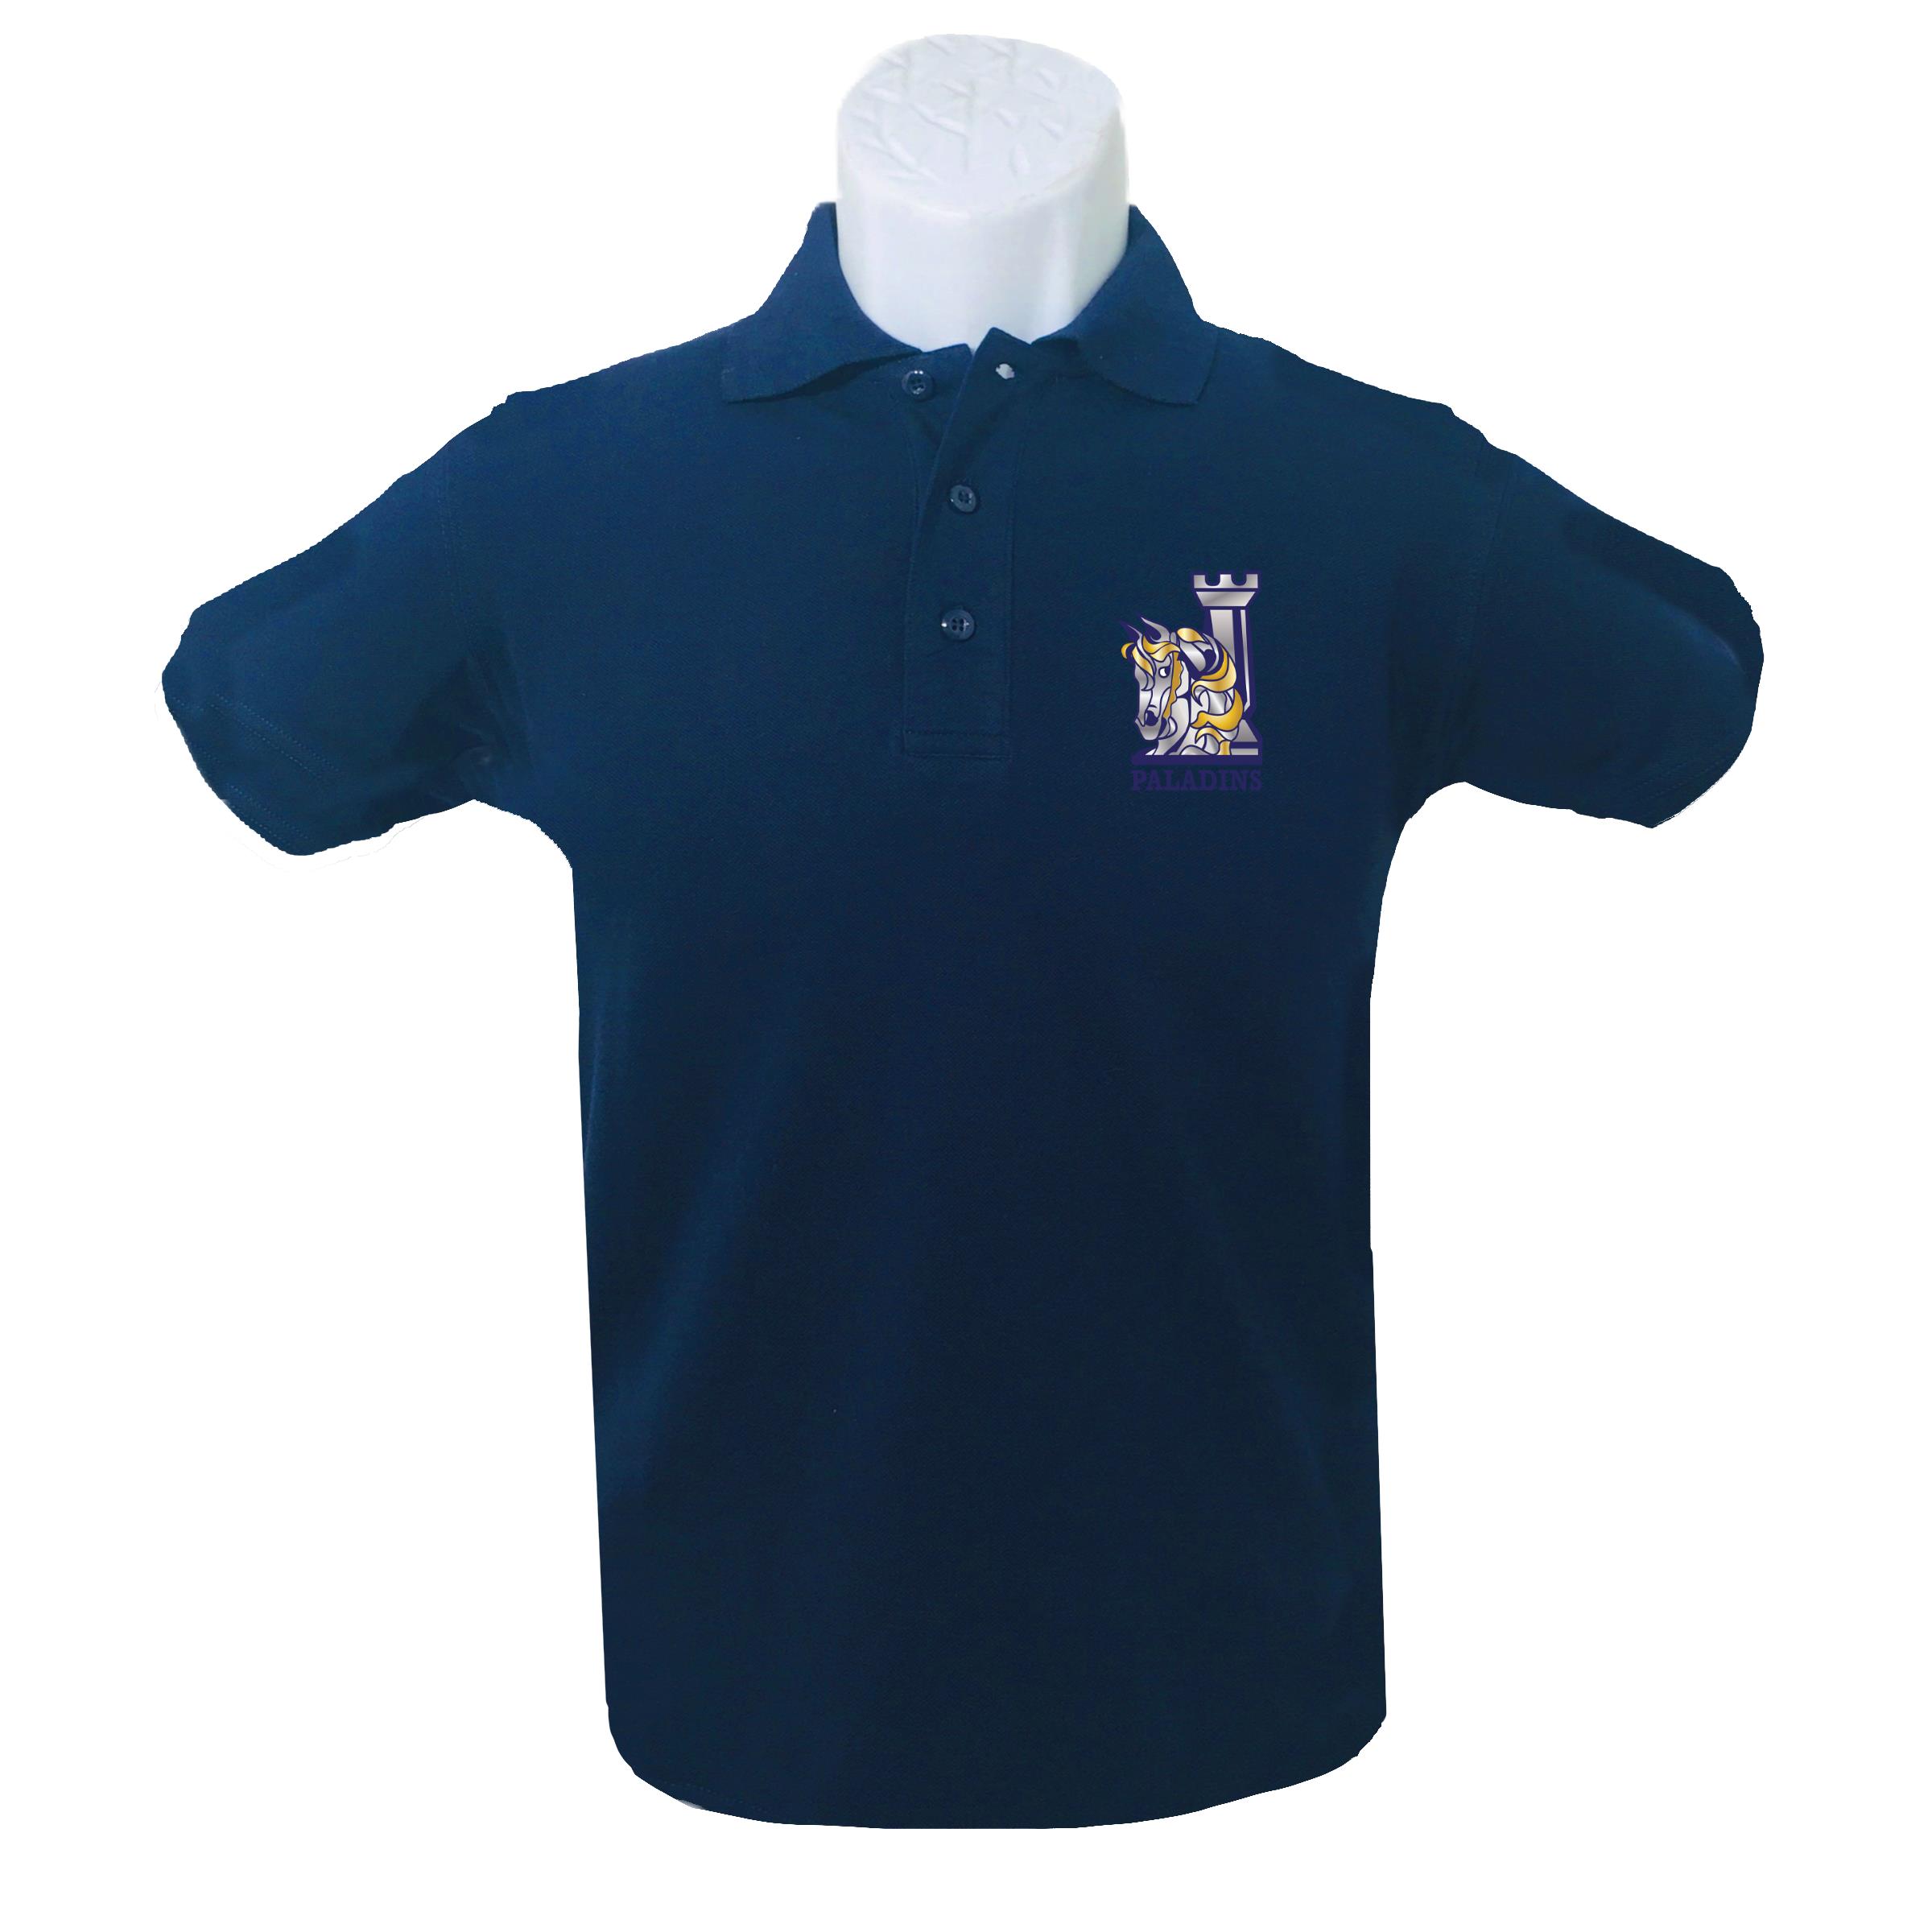 Download Ibiley Uniforms & More - #1 Online Retailer for Boys ...